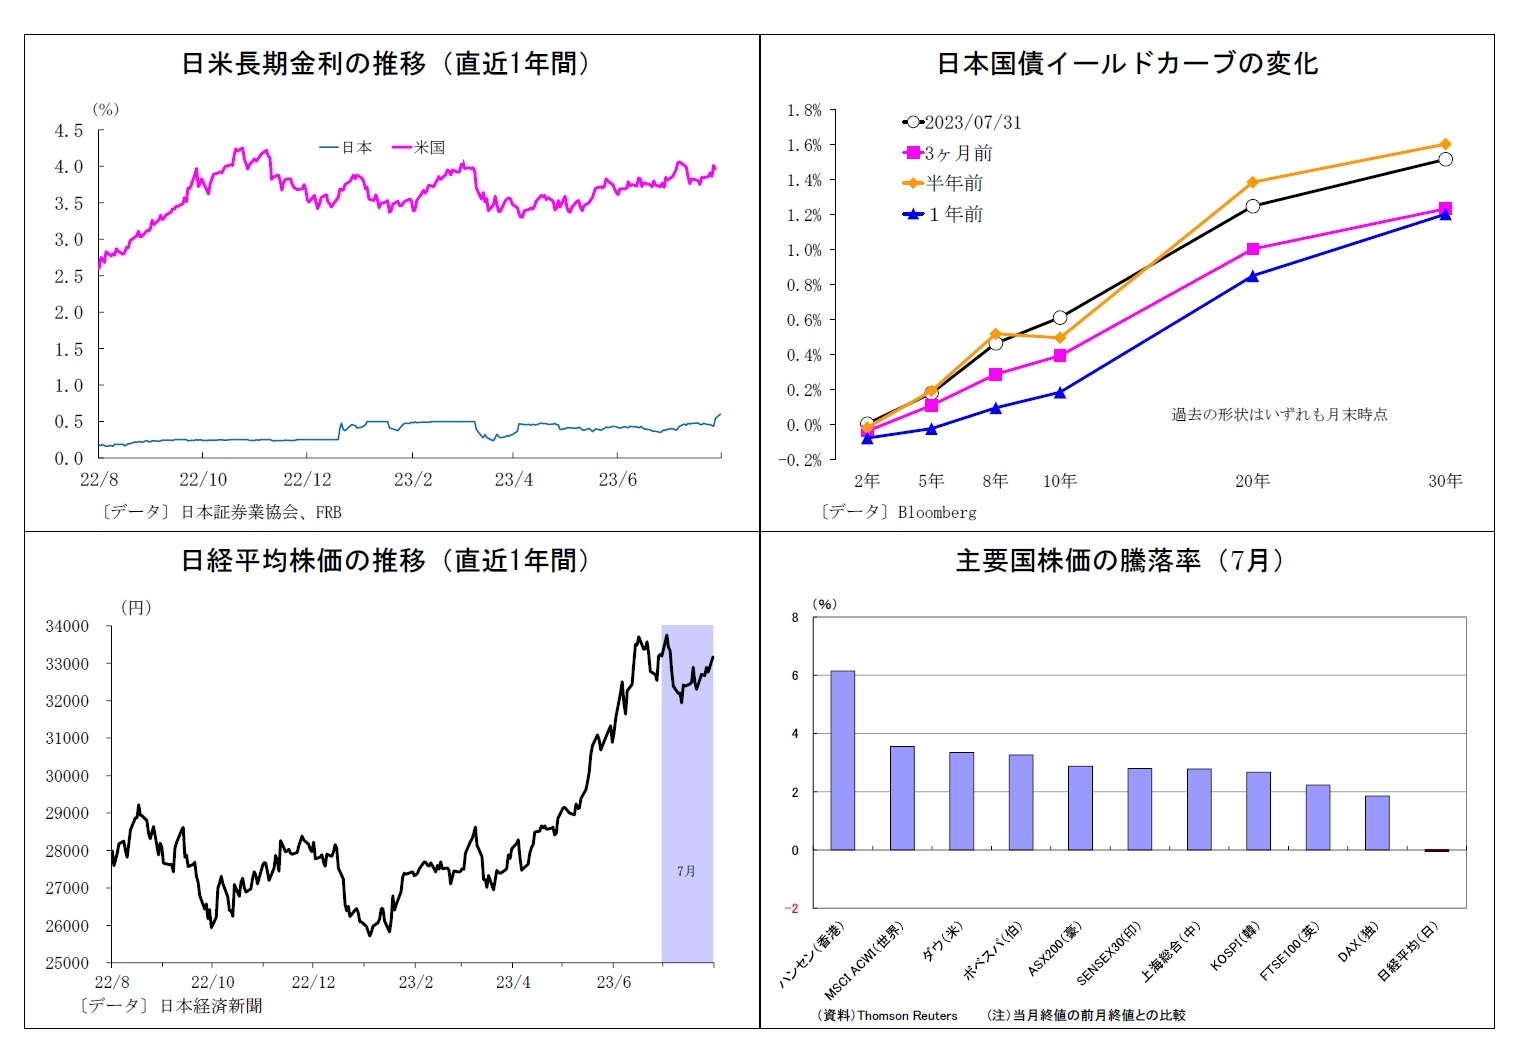 日米長期金利の推移（直近1年間）/日本国債イールドカーブの変化/日経平均株価の推移（直近1年間）/主要国株価の騰落率（7月）